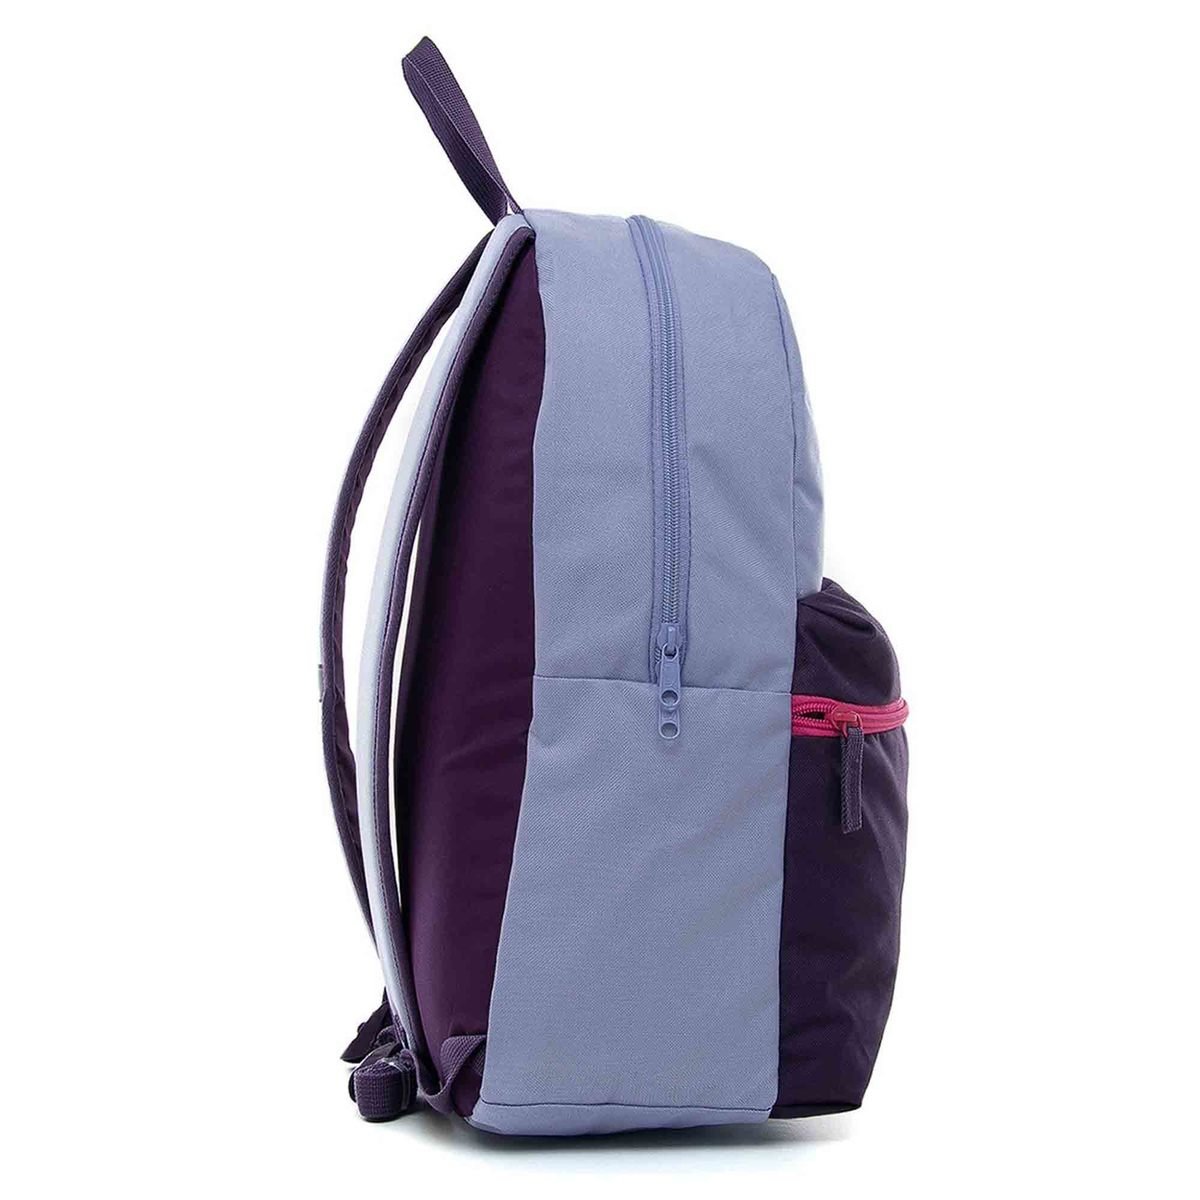 PUMA Phase Backpack Purple 07548713